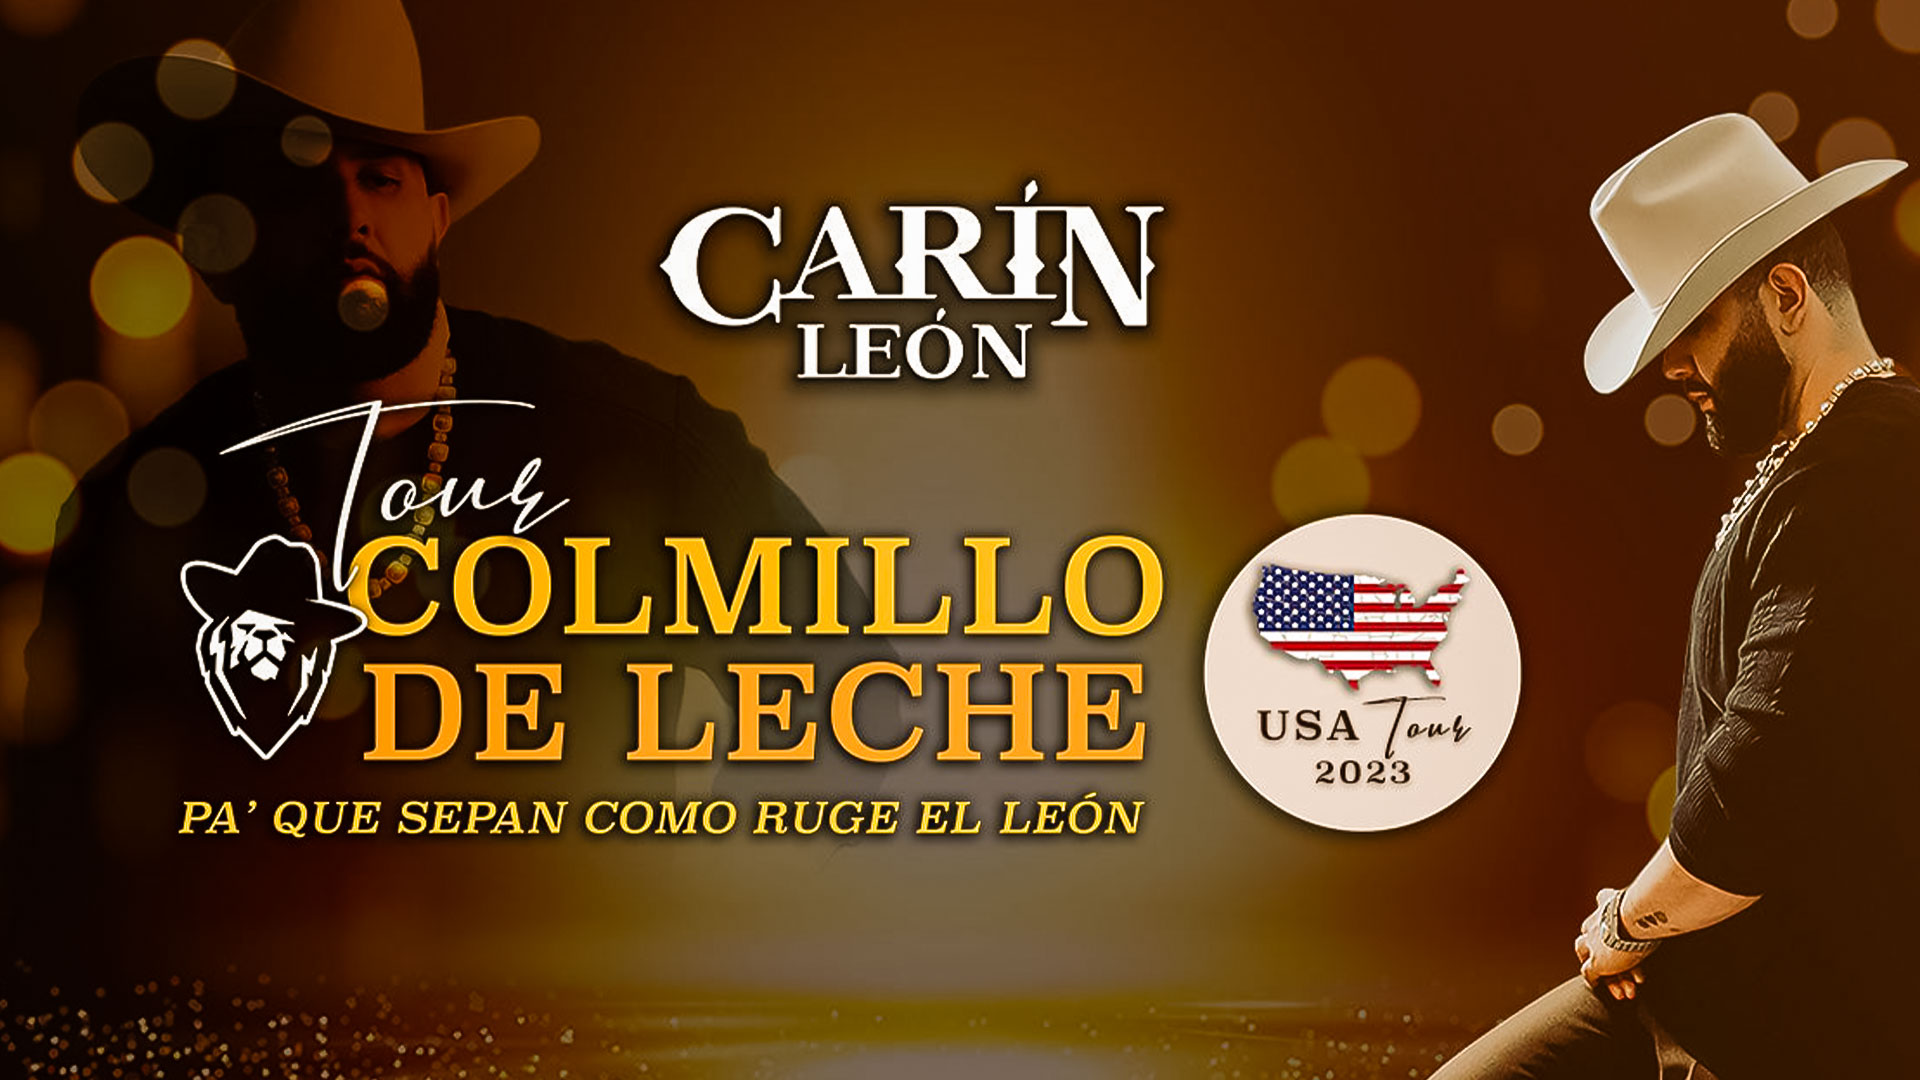 Carin Leon Tour 2023